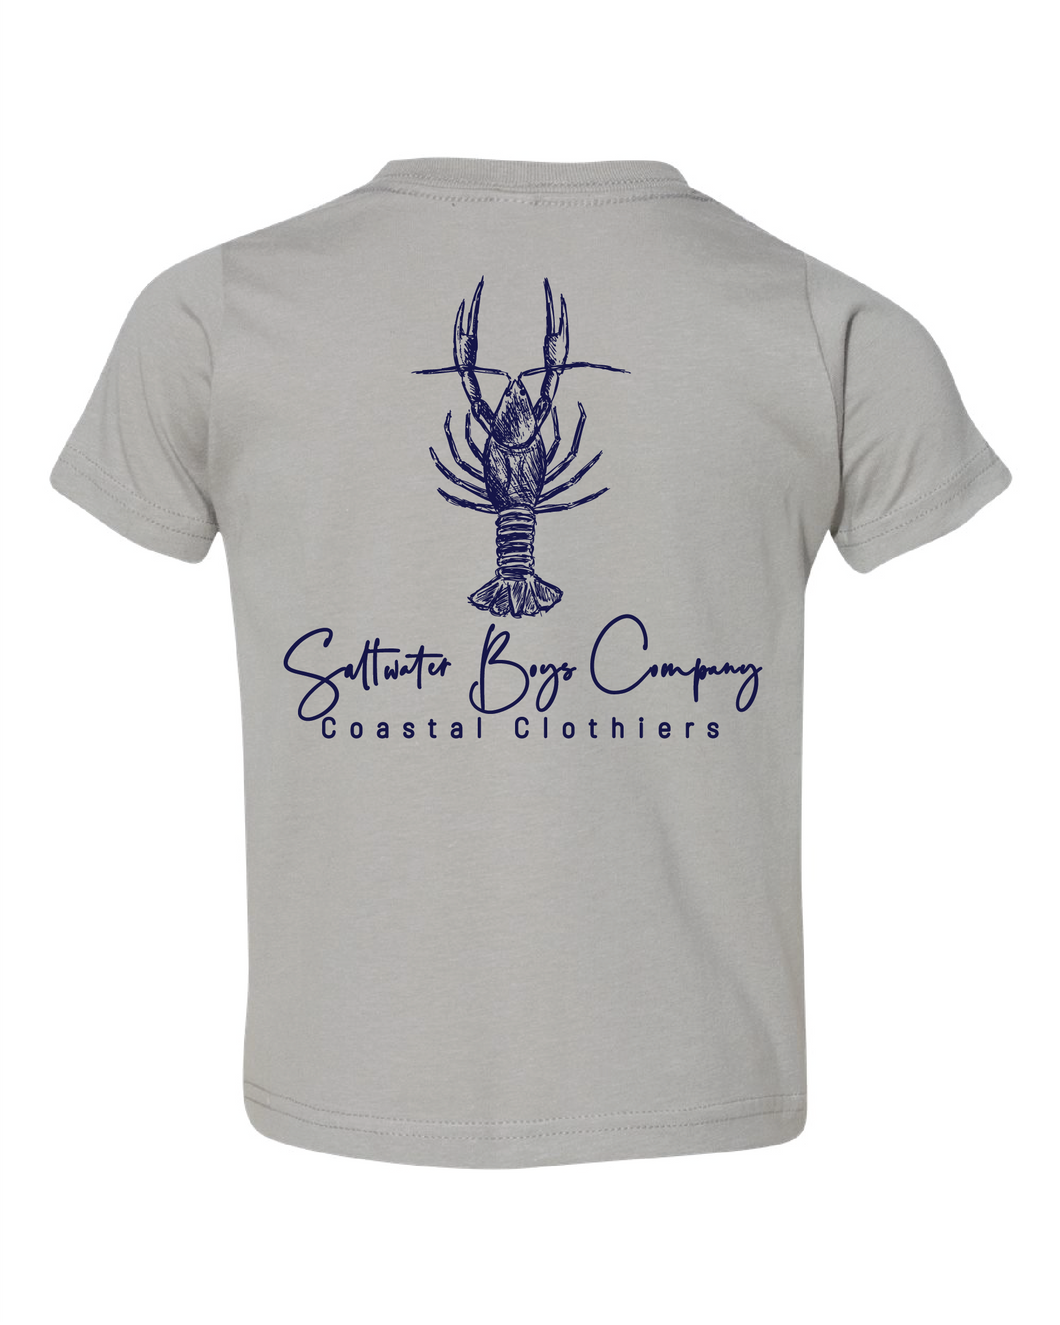 Saltwater Boys Company - Key West Lobster Short Sleeve Tee Grey